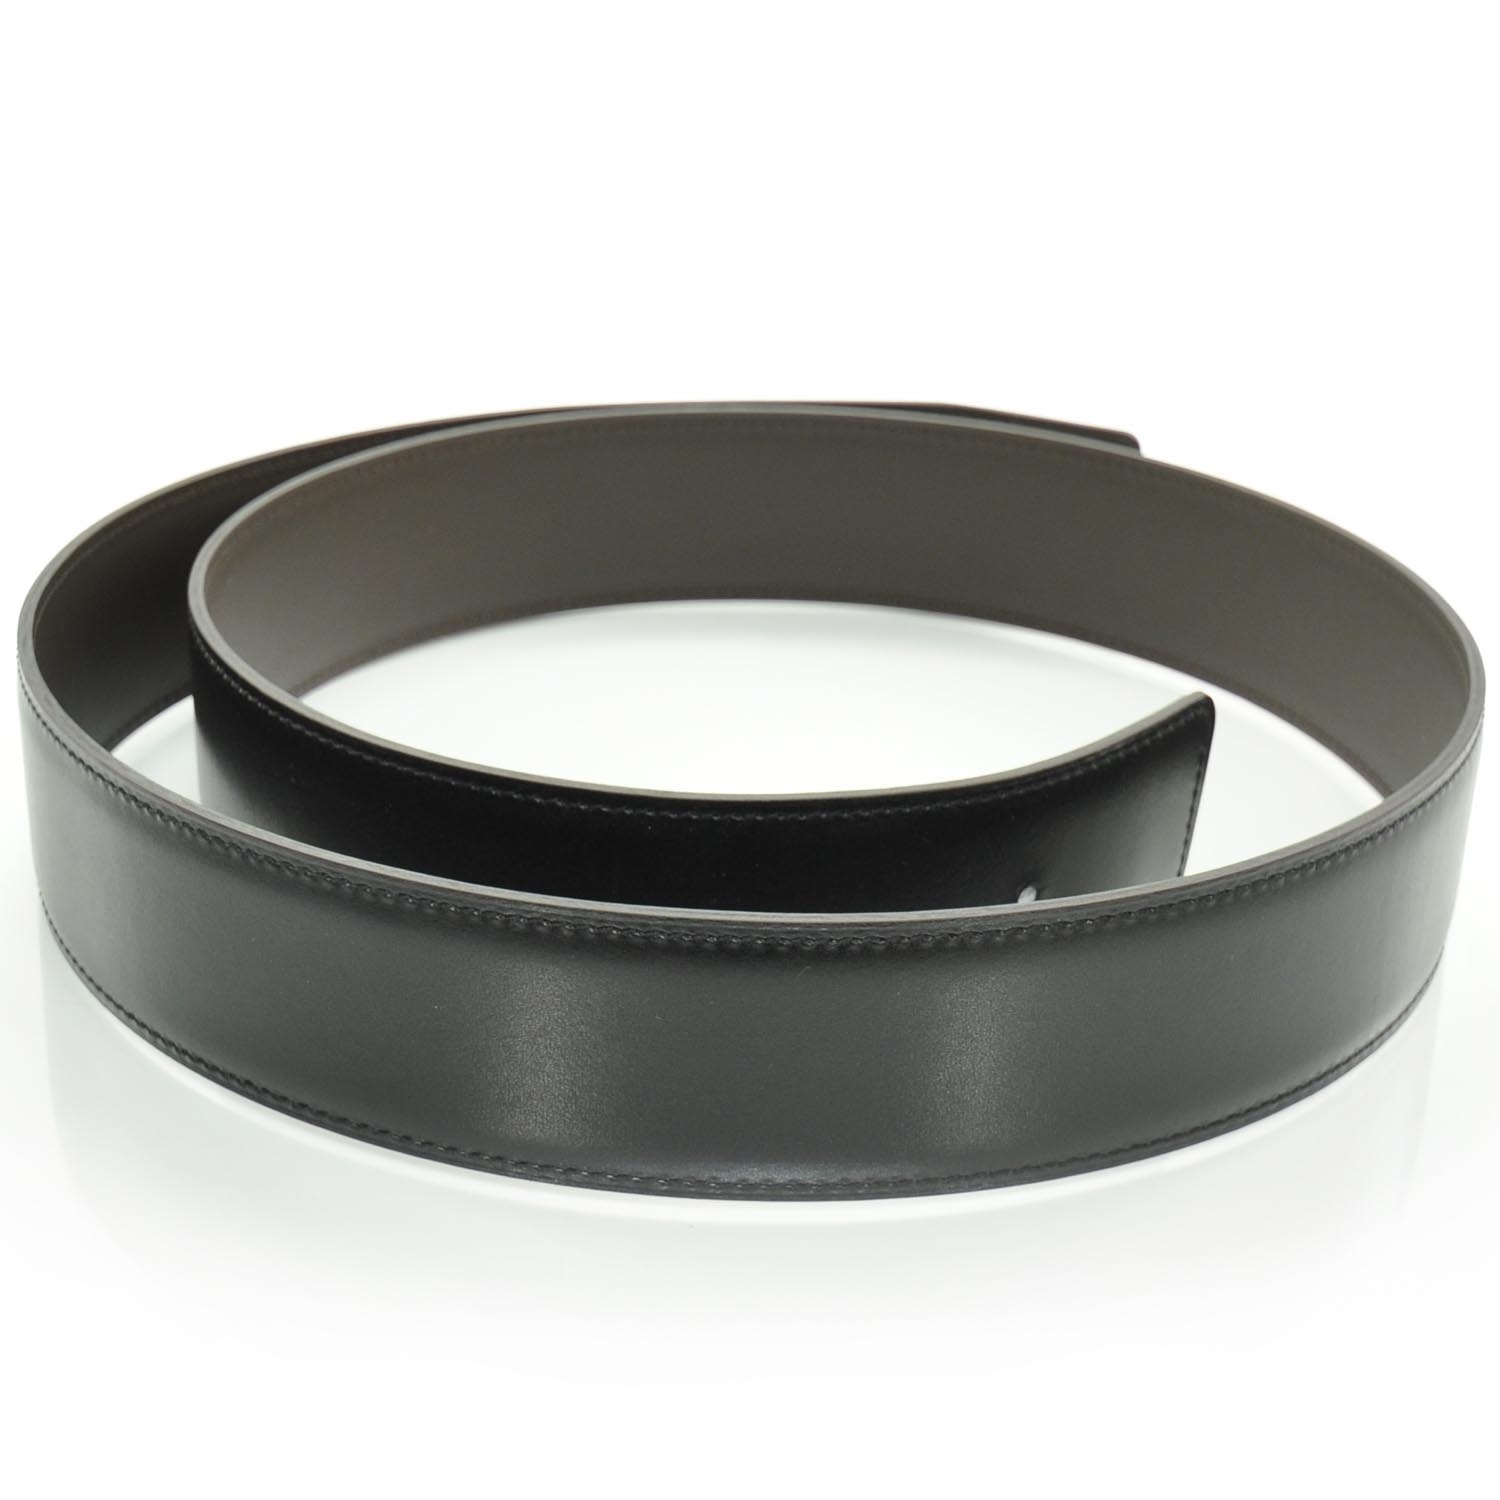 HERMES Leather Reversible Belt Strap 100 Black and Brown 25113